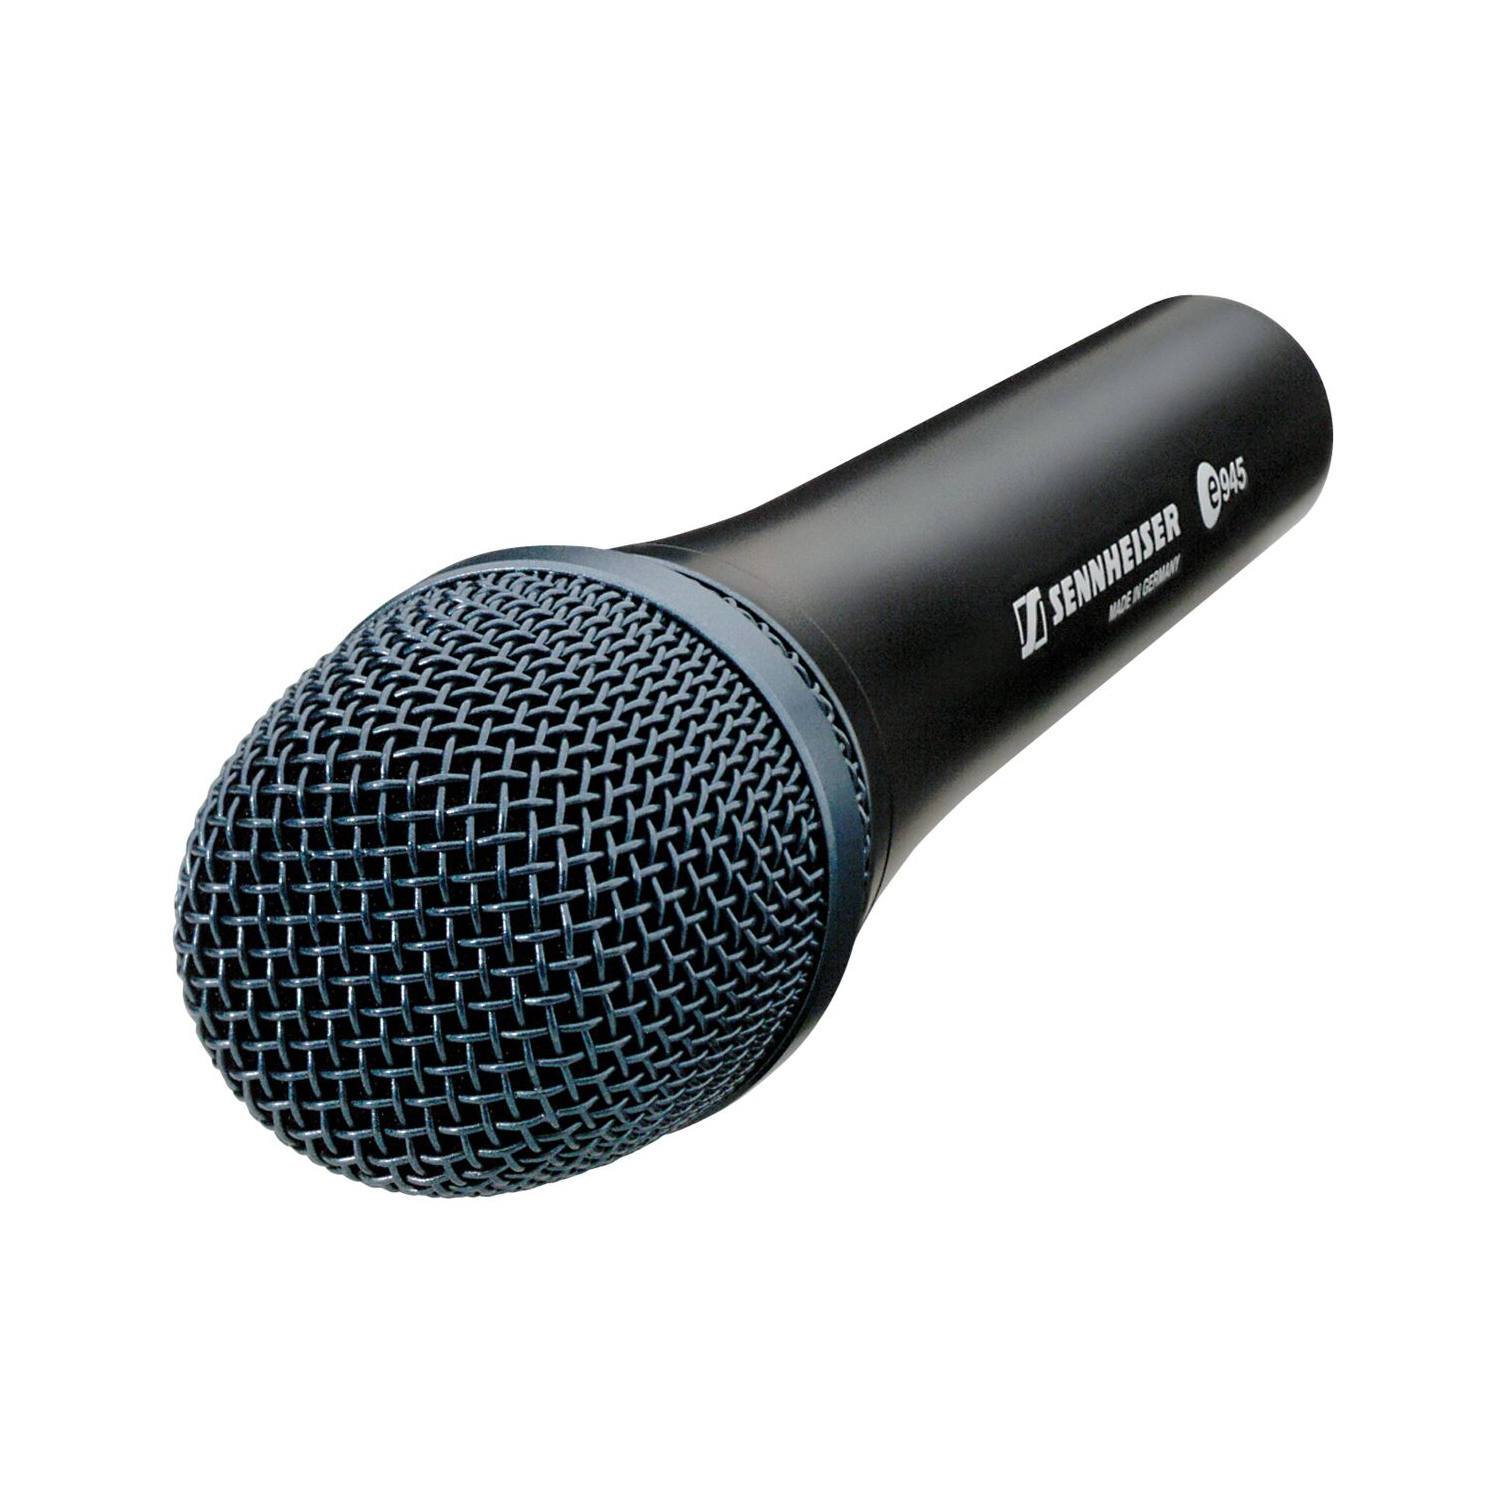 Sennheiser Microphone e 965 voix Evolution, cardioide/supercardioide